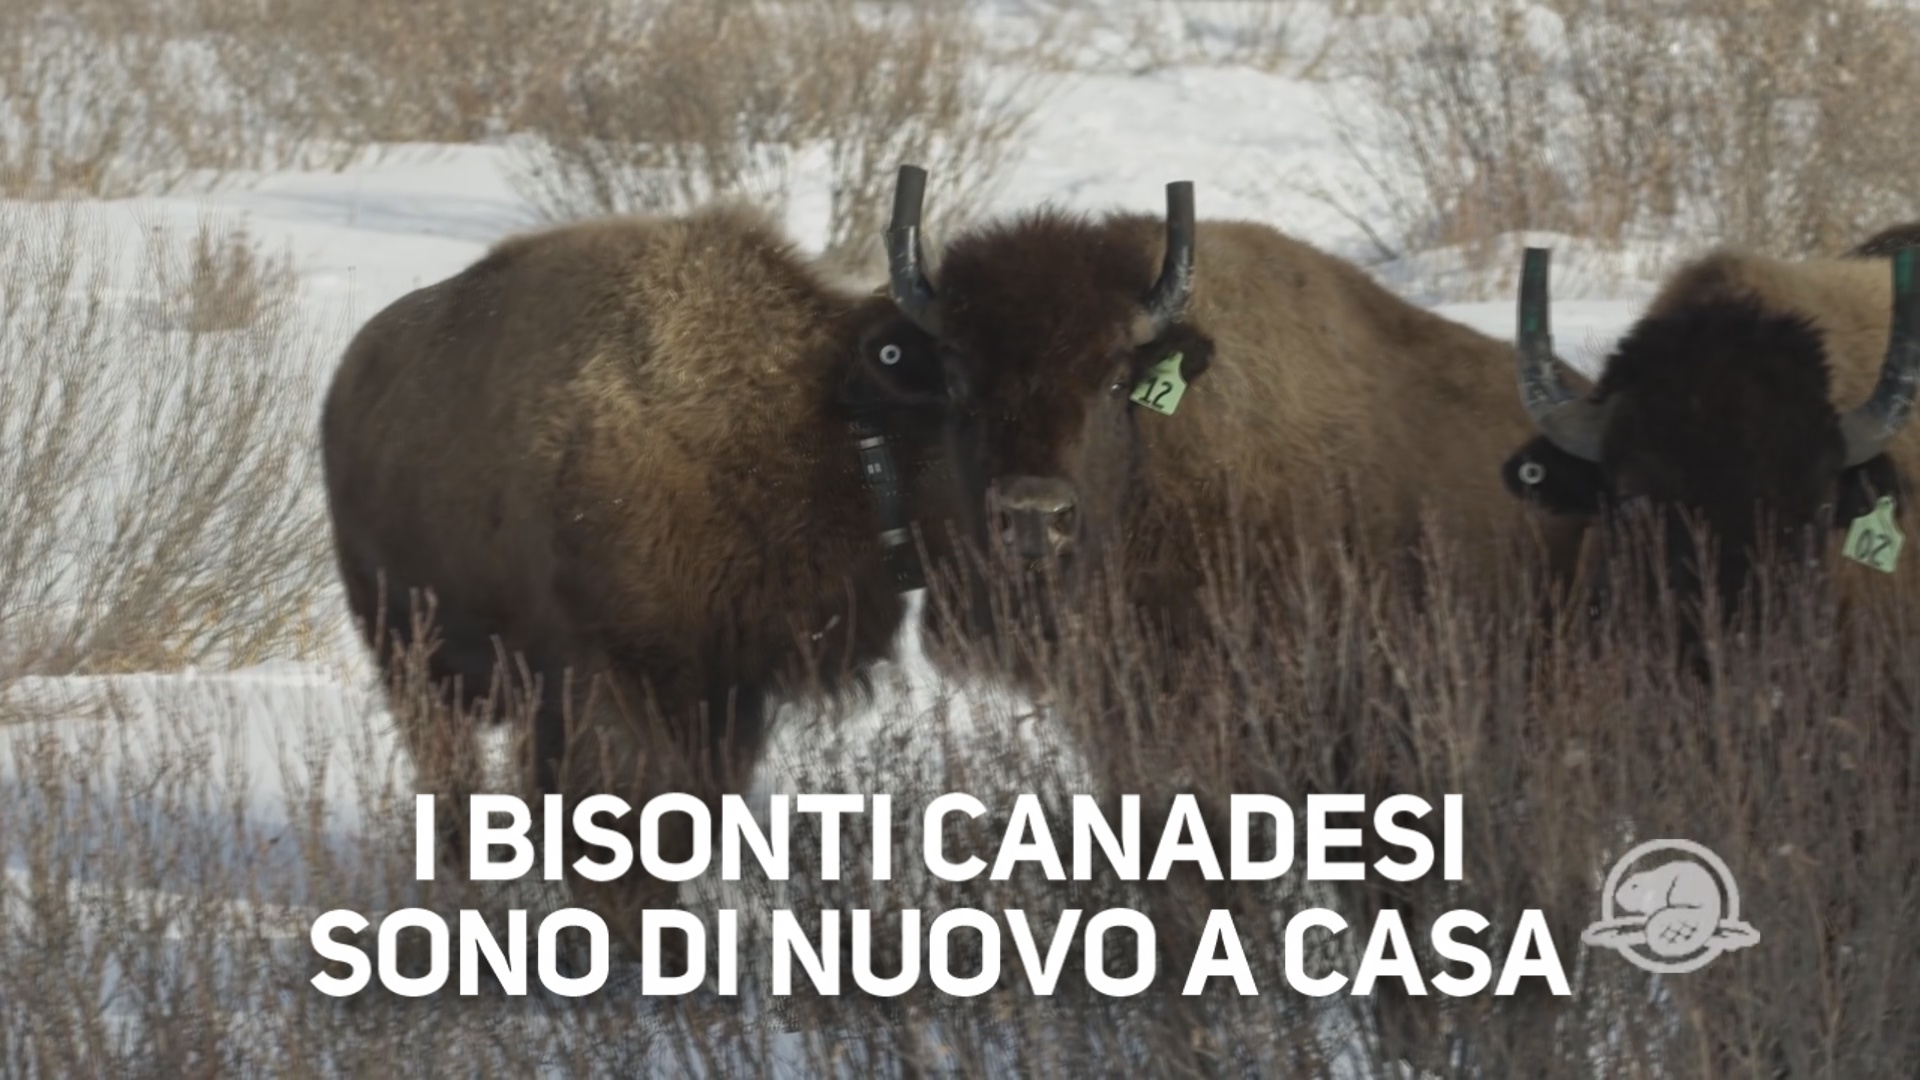 I bisonti tornano a casa: che meraviglia!